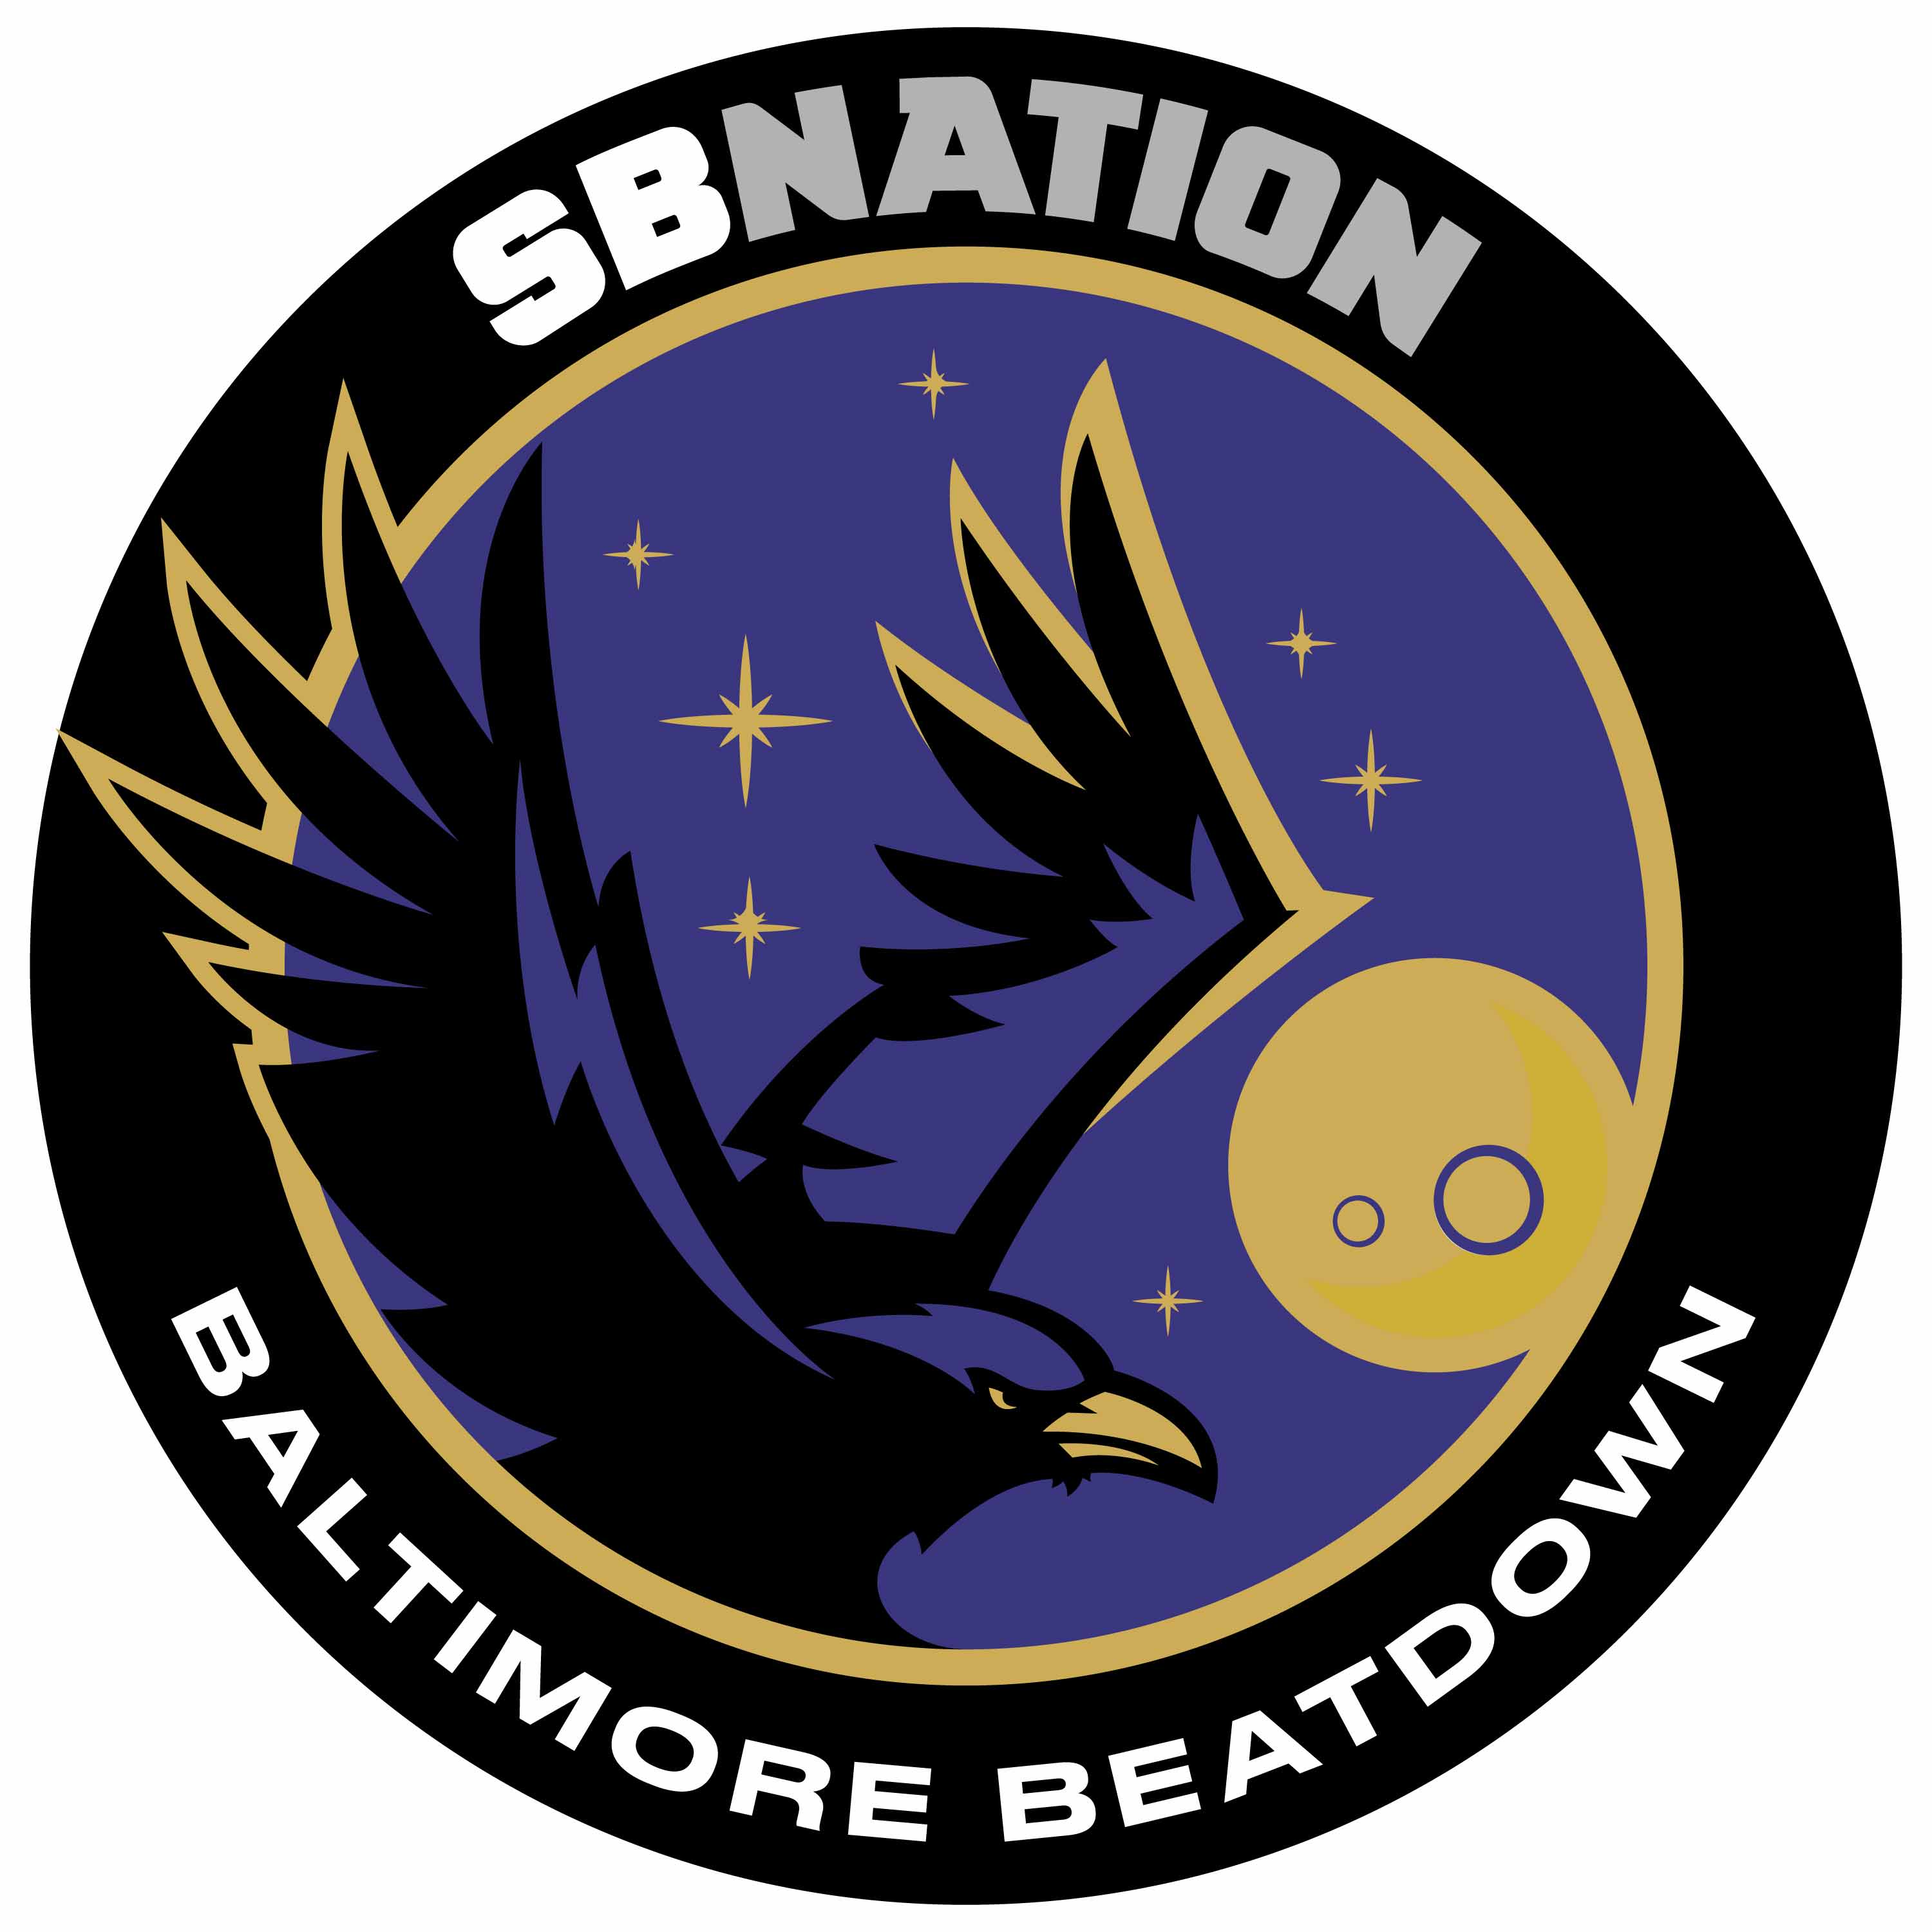 Baltimore Beatdown